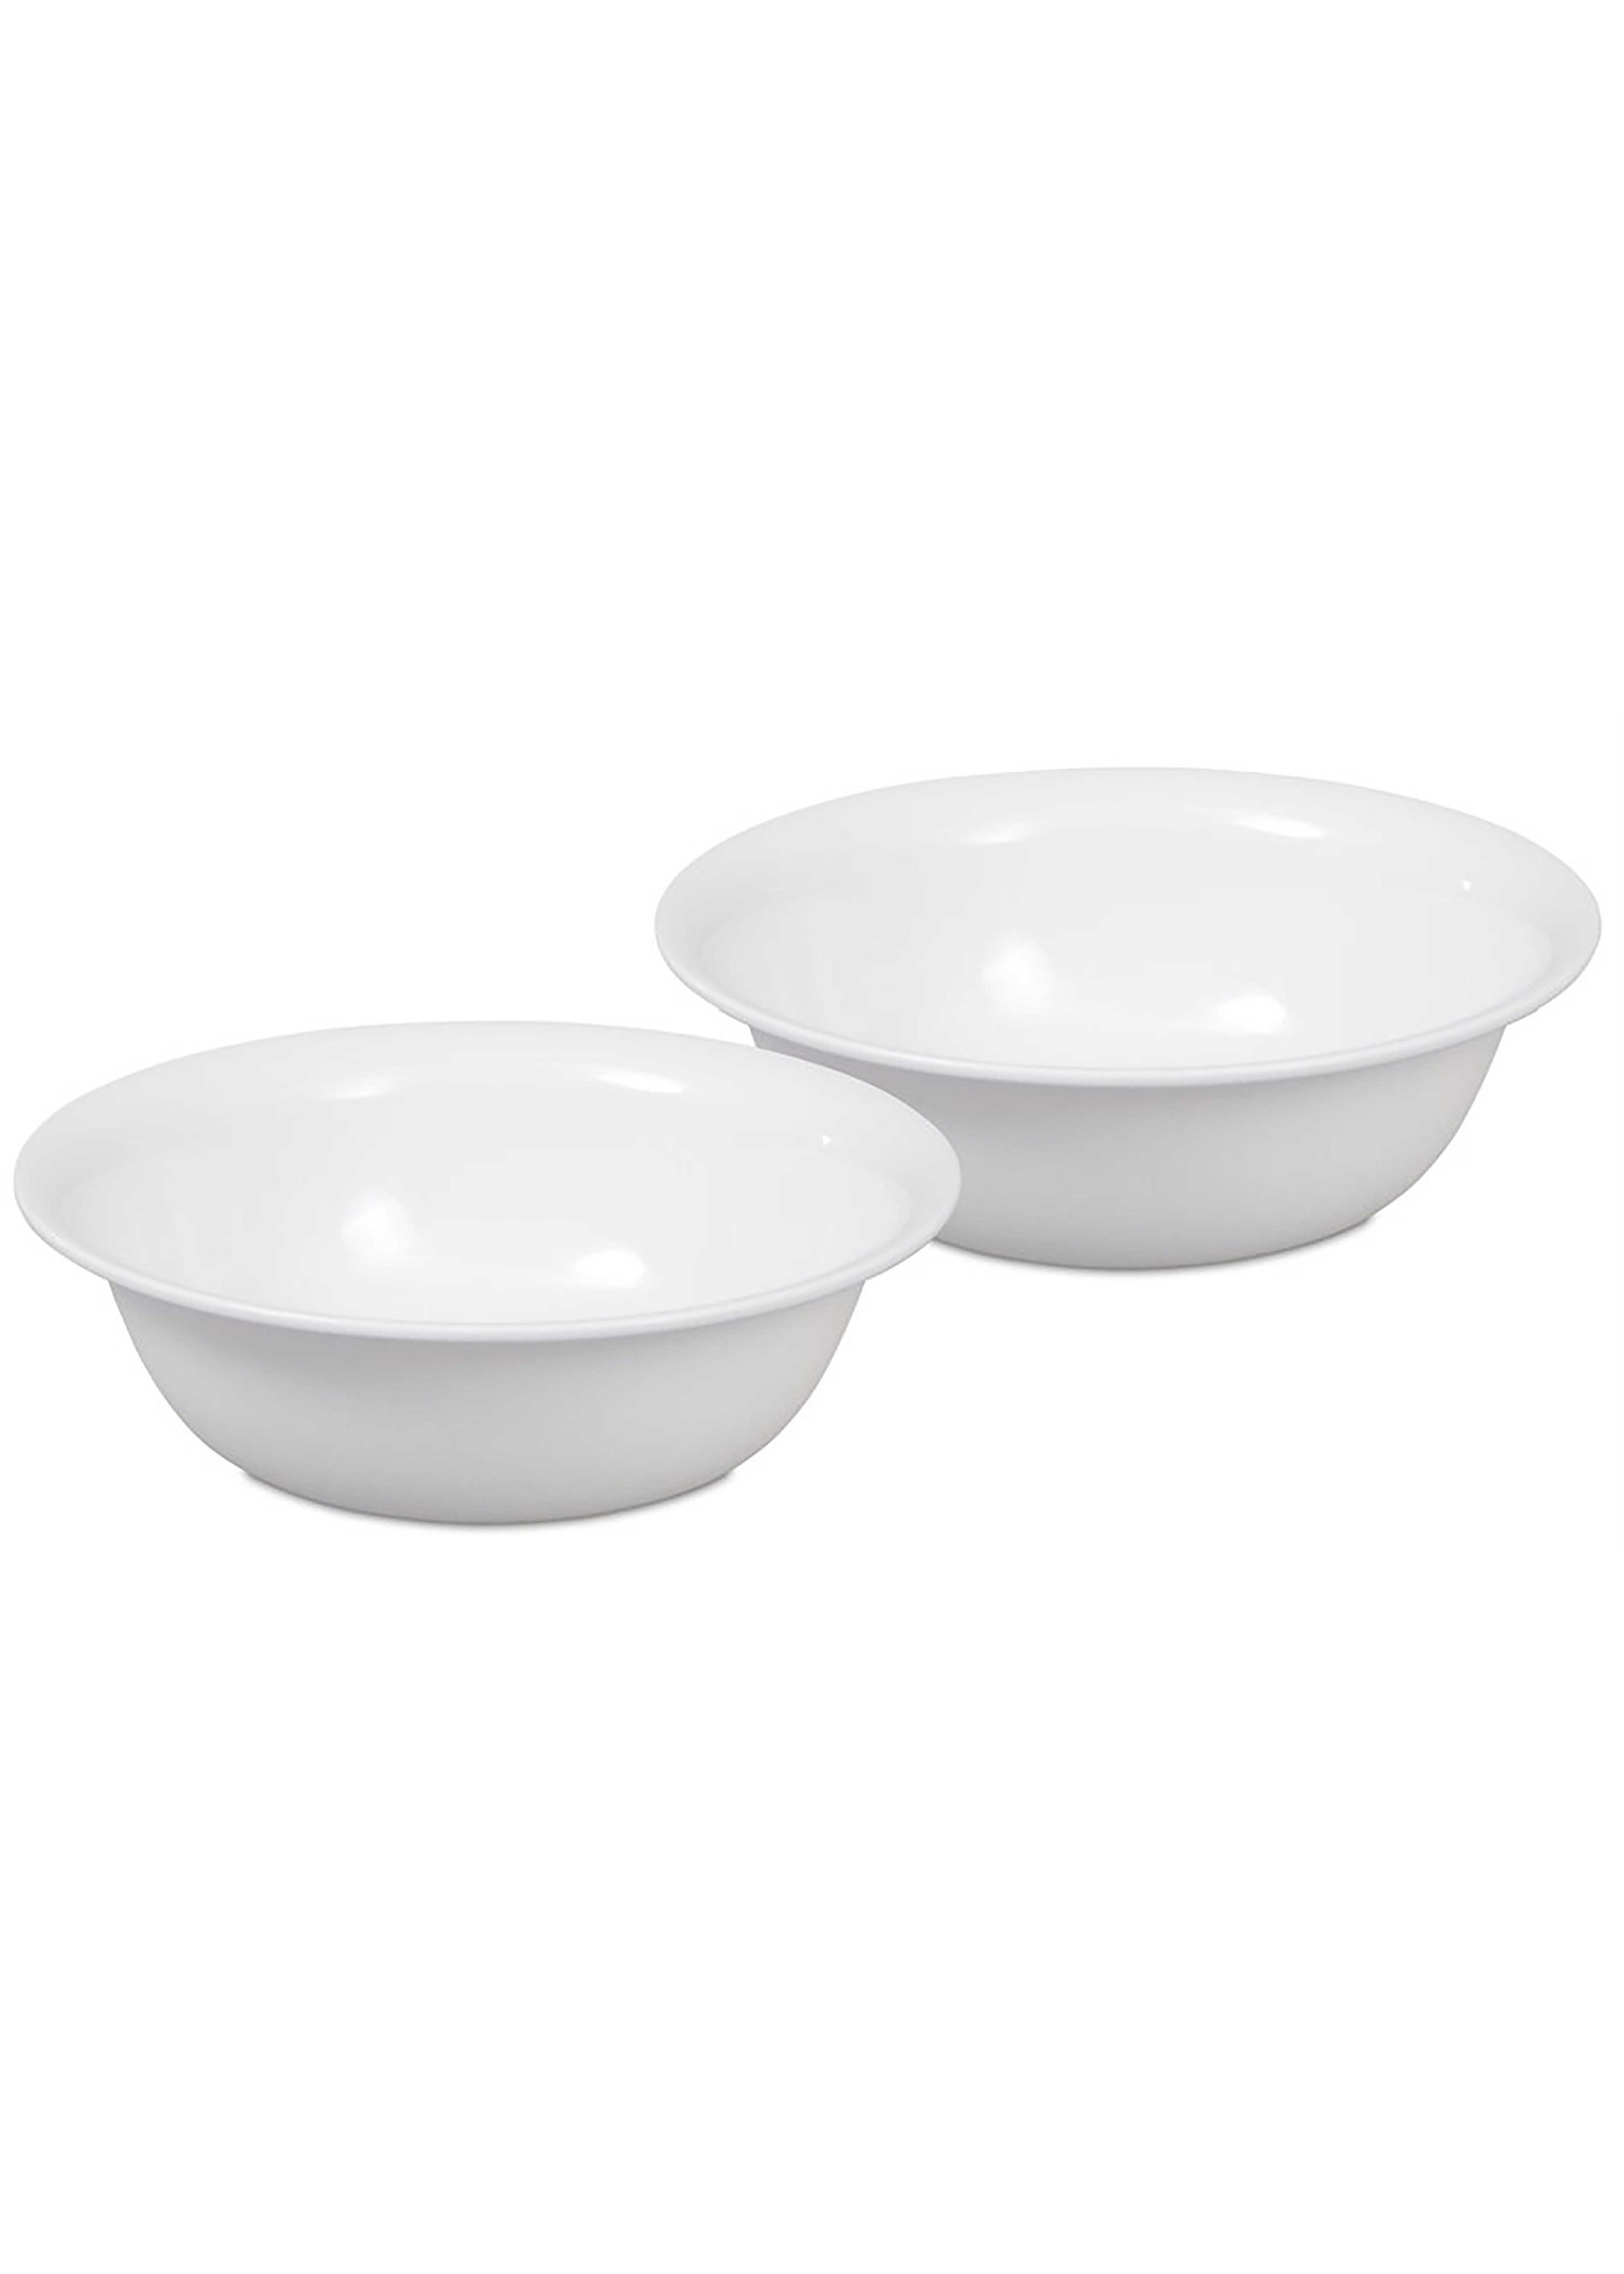 B2 FASHIONS INC Sterilite Set of 2 White Bowls 1.4L